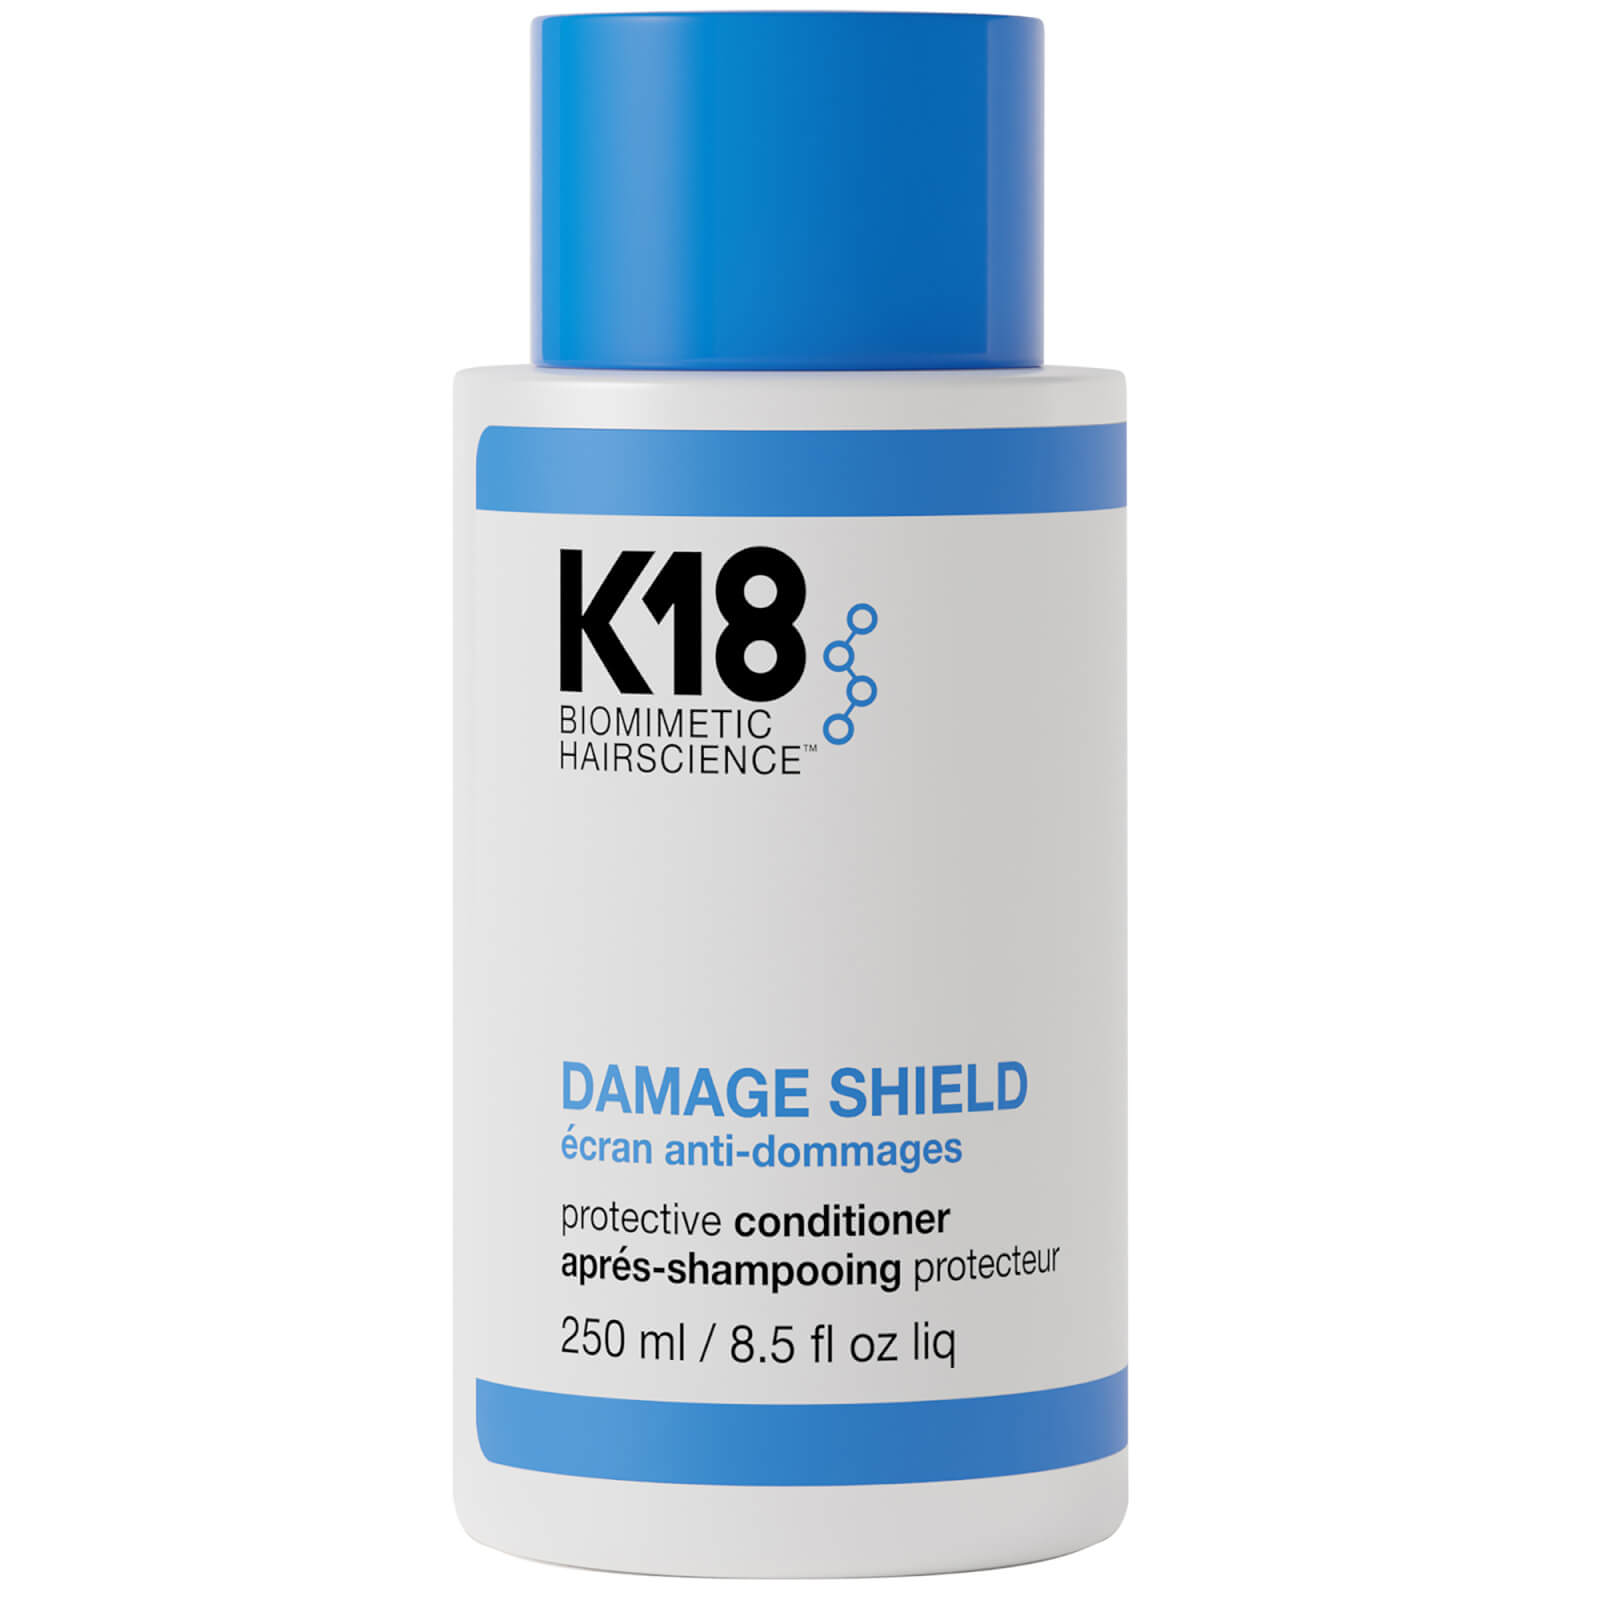 Shop K18 Biomimetic Hairscience Damage Shield Protective Conditioner 250ml